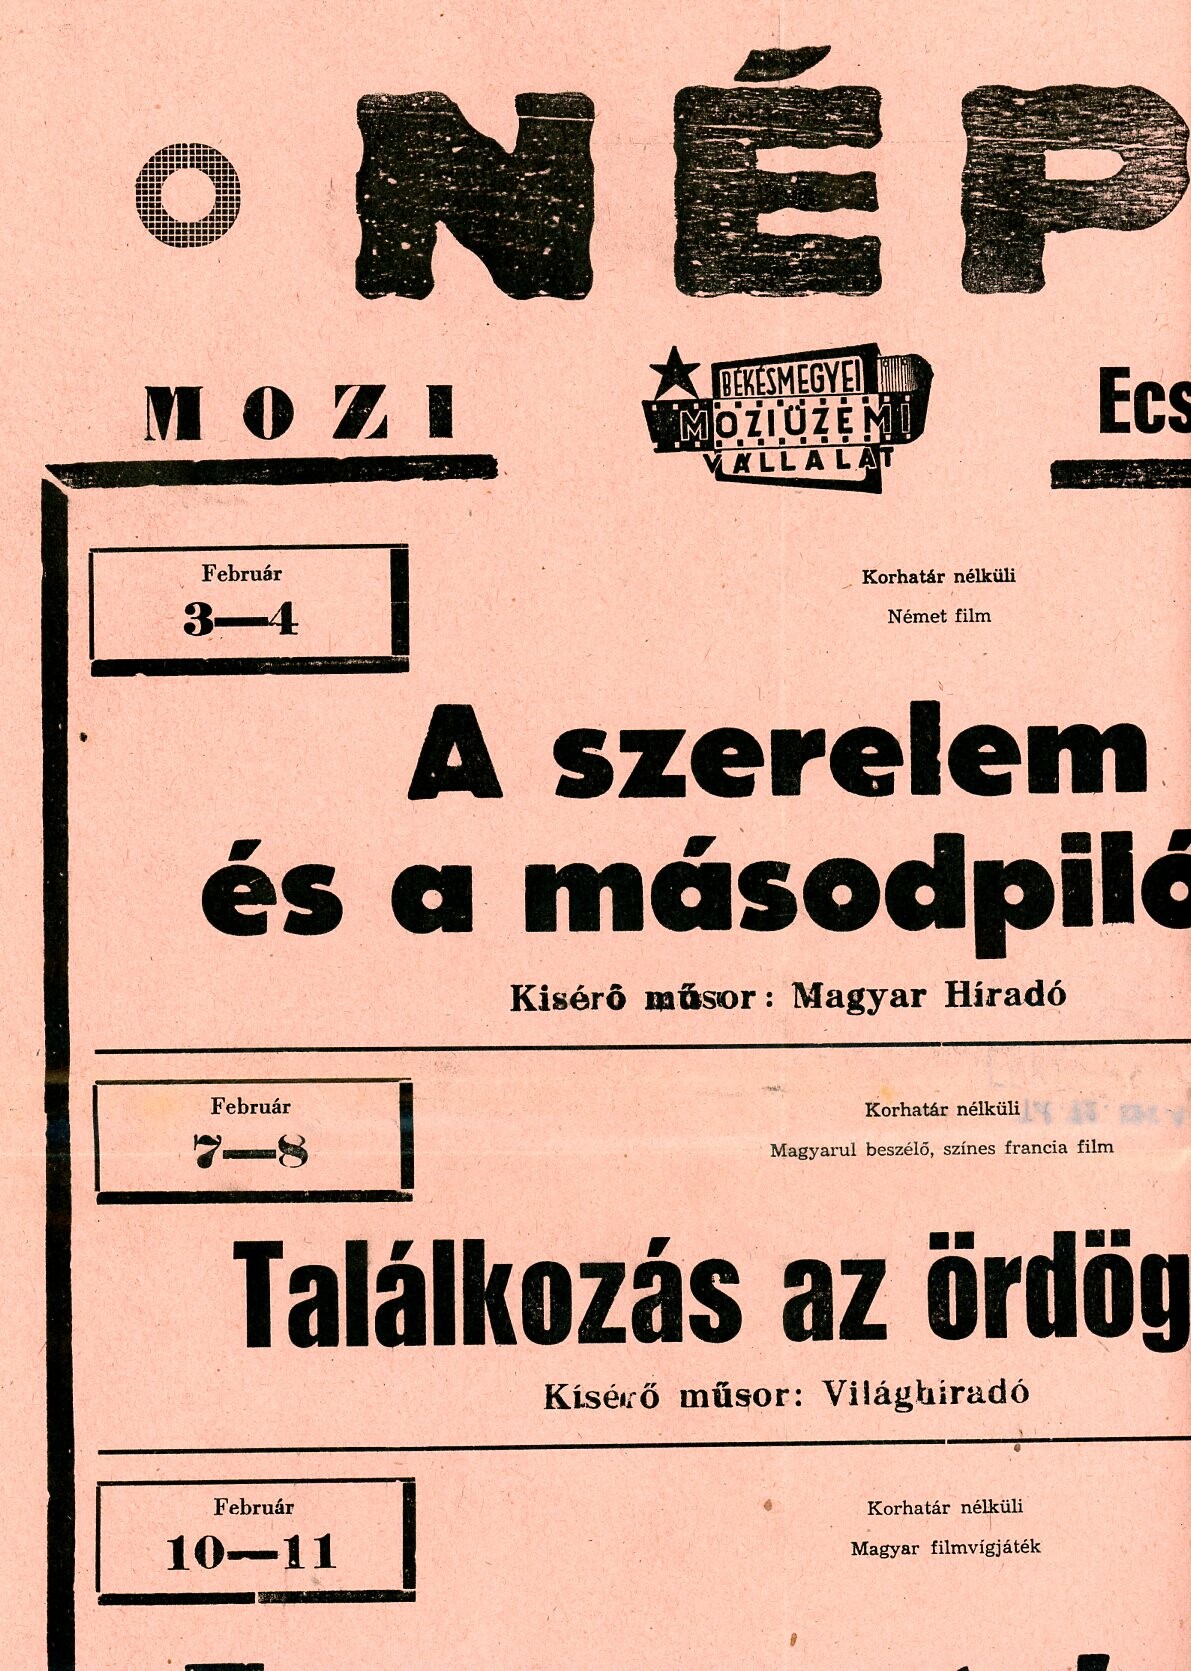 mozi plakát (Erkel Ferenc Múzeum CC BY-NC-SA)